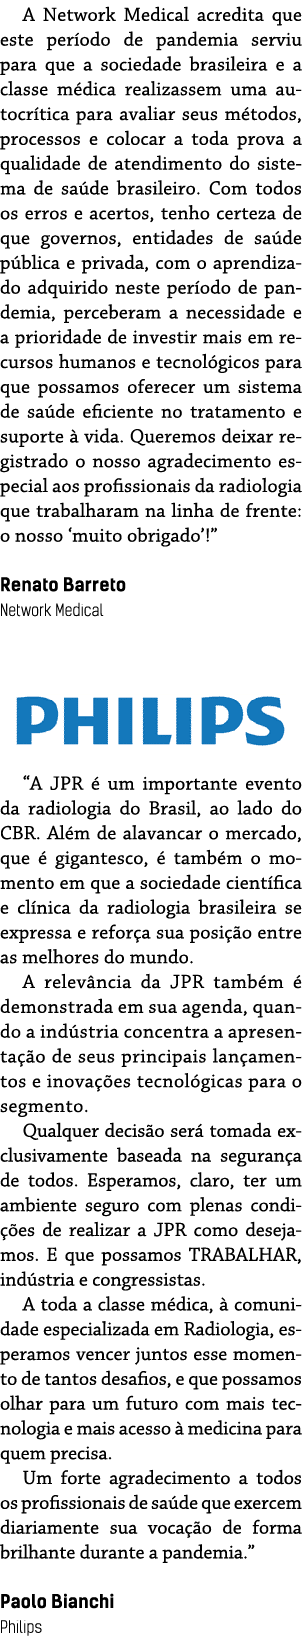 A Network Medical acredita que este per odo de pandemia serviu para que a sociedade brasileira e a classe m dica real   